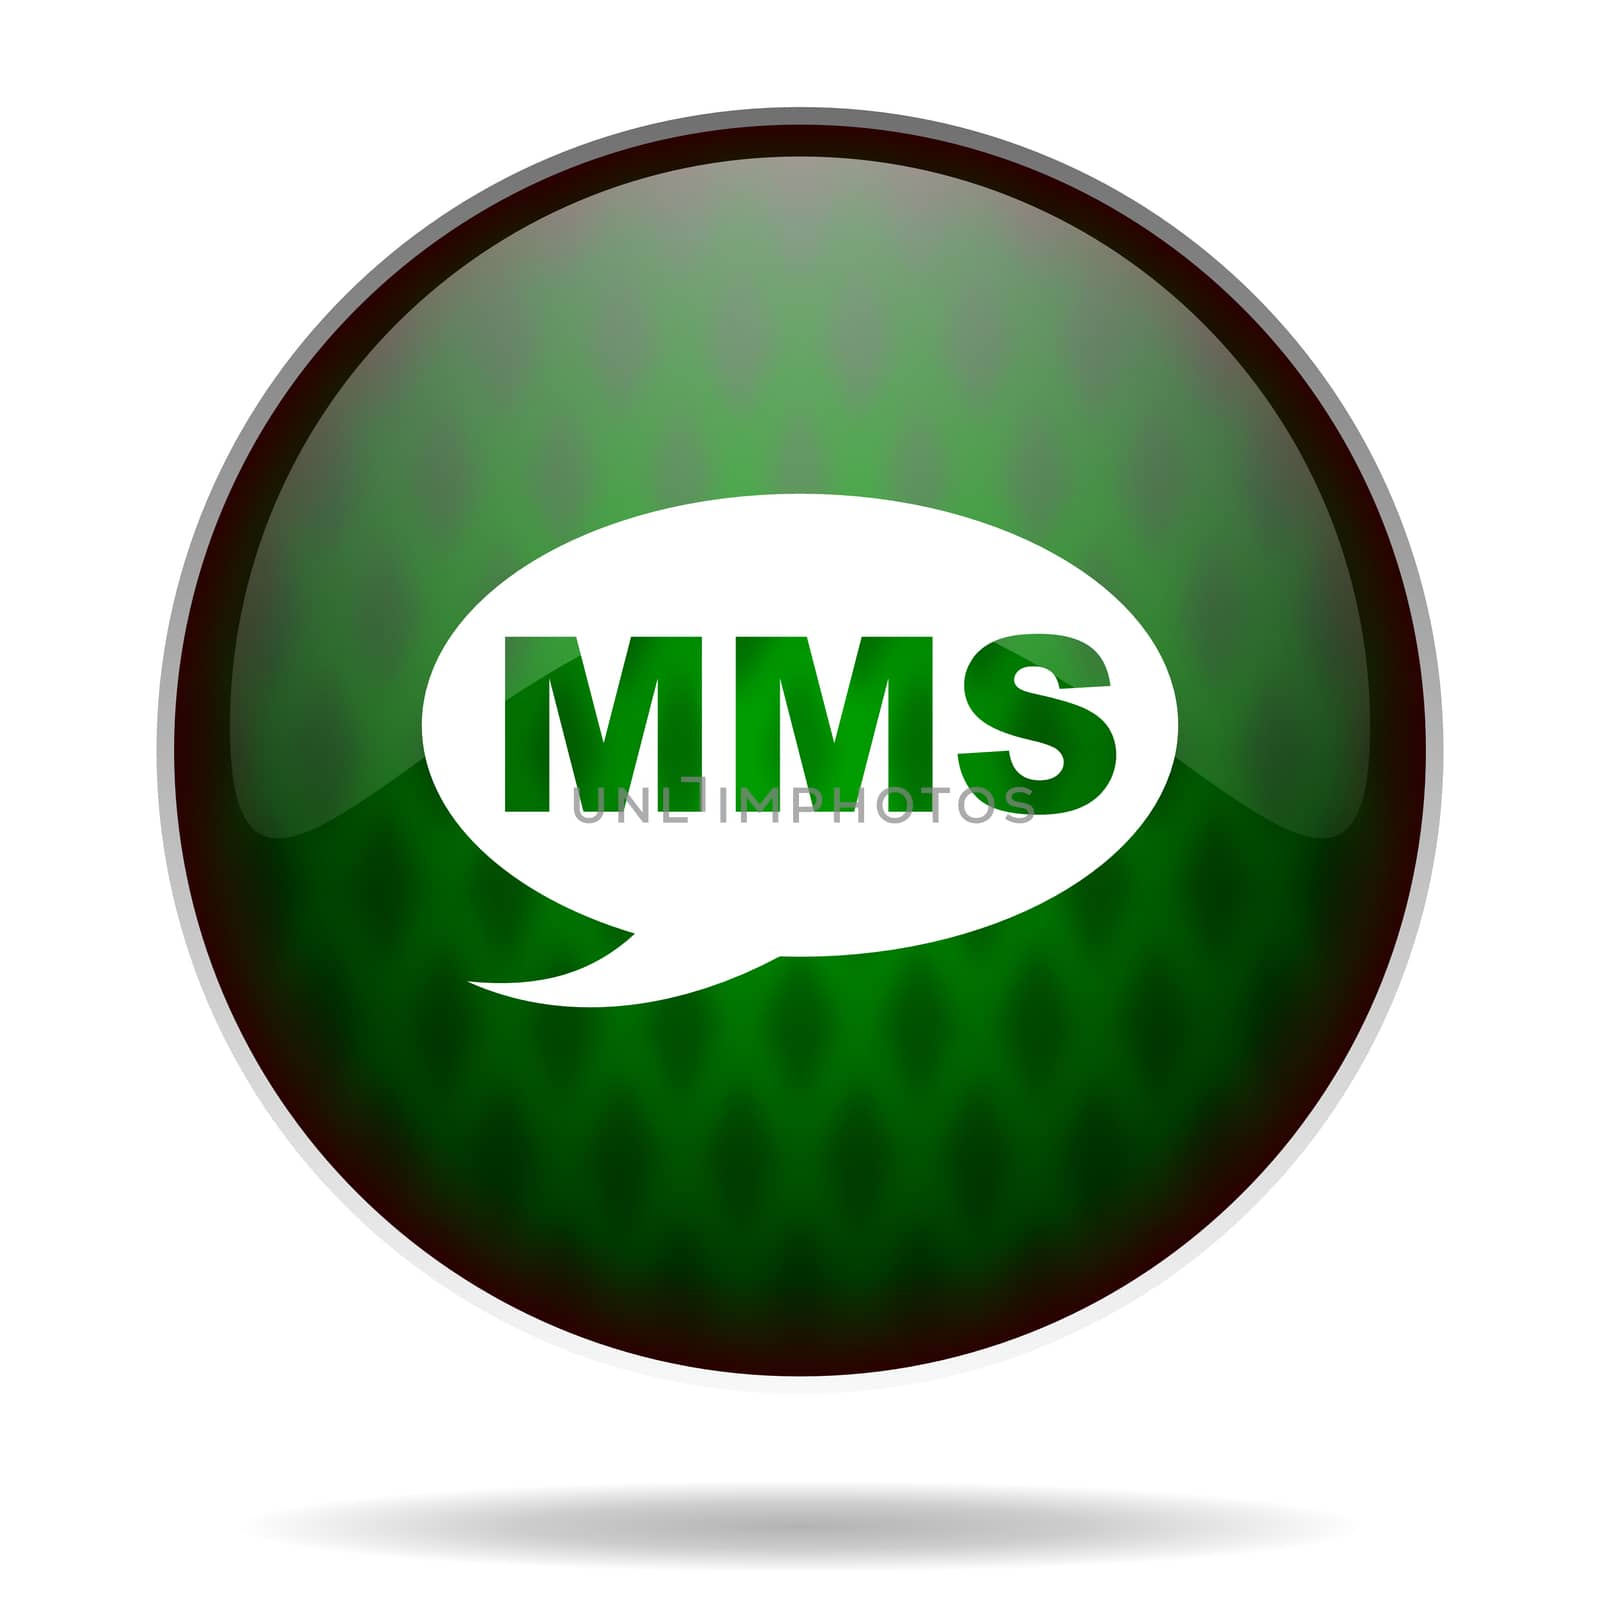 mms green internet icon